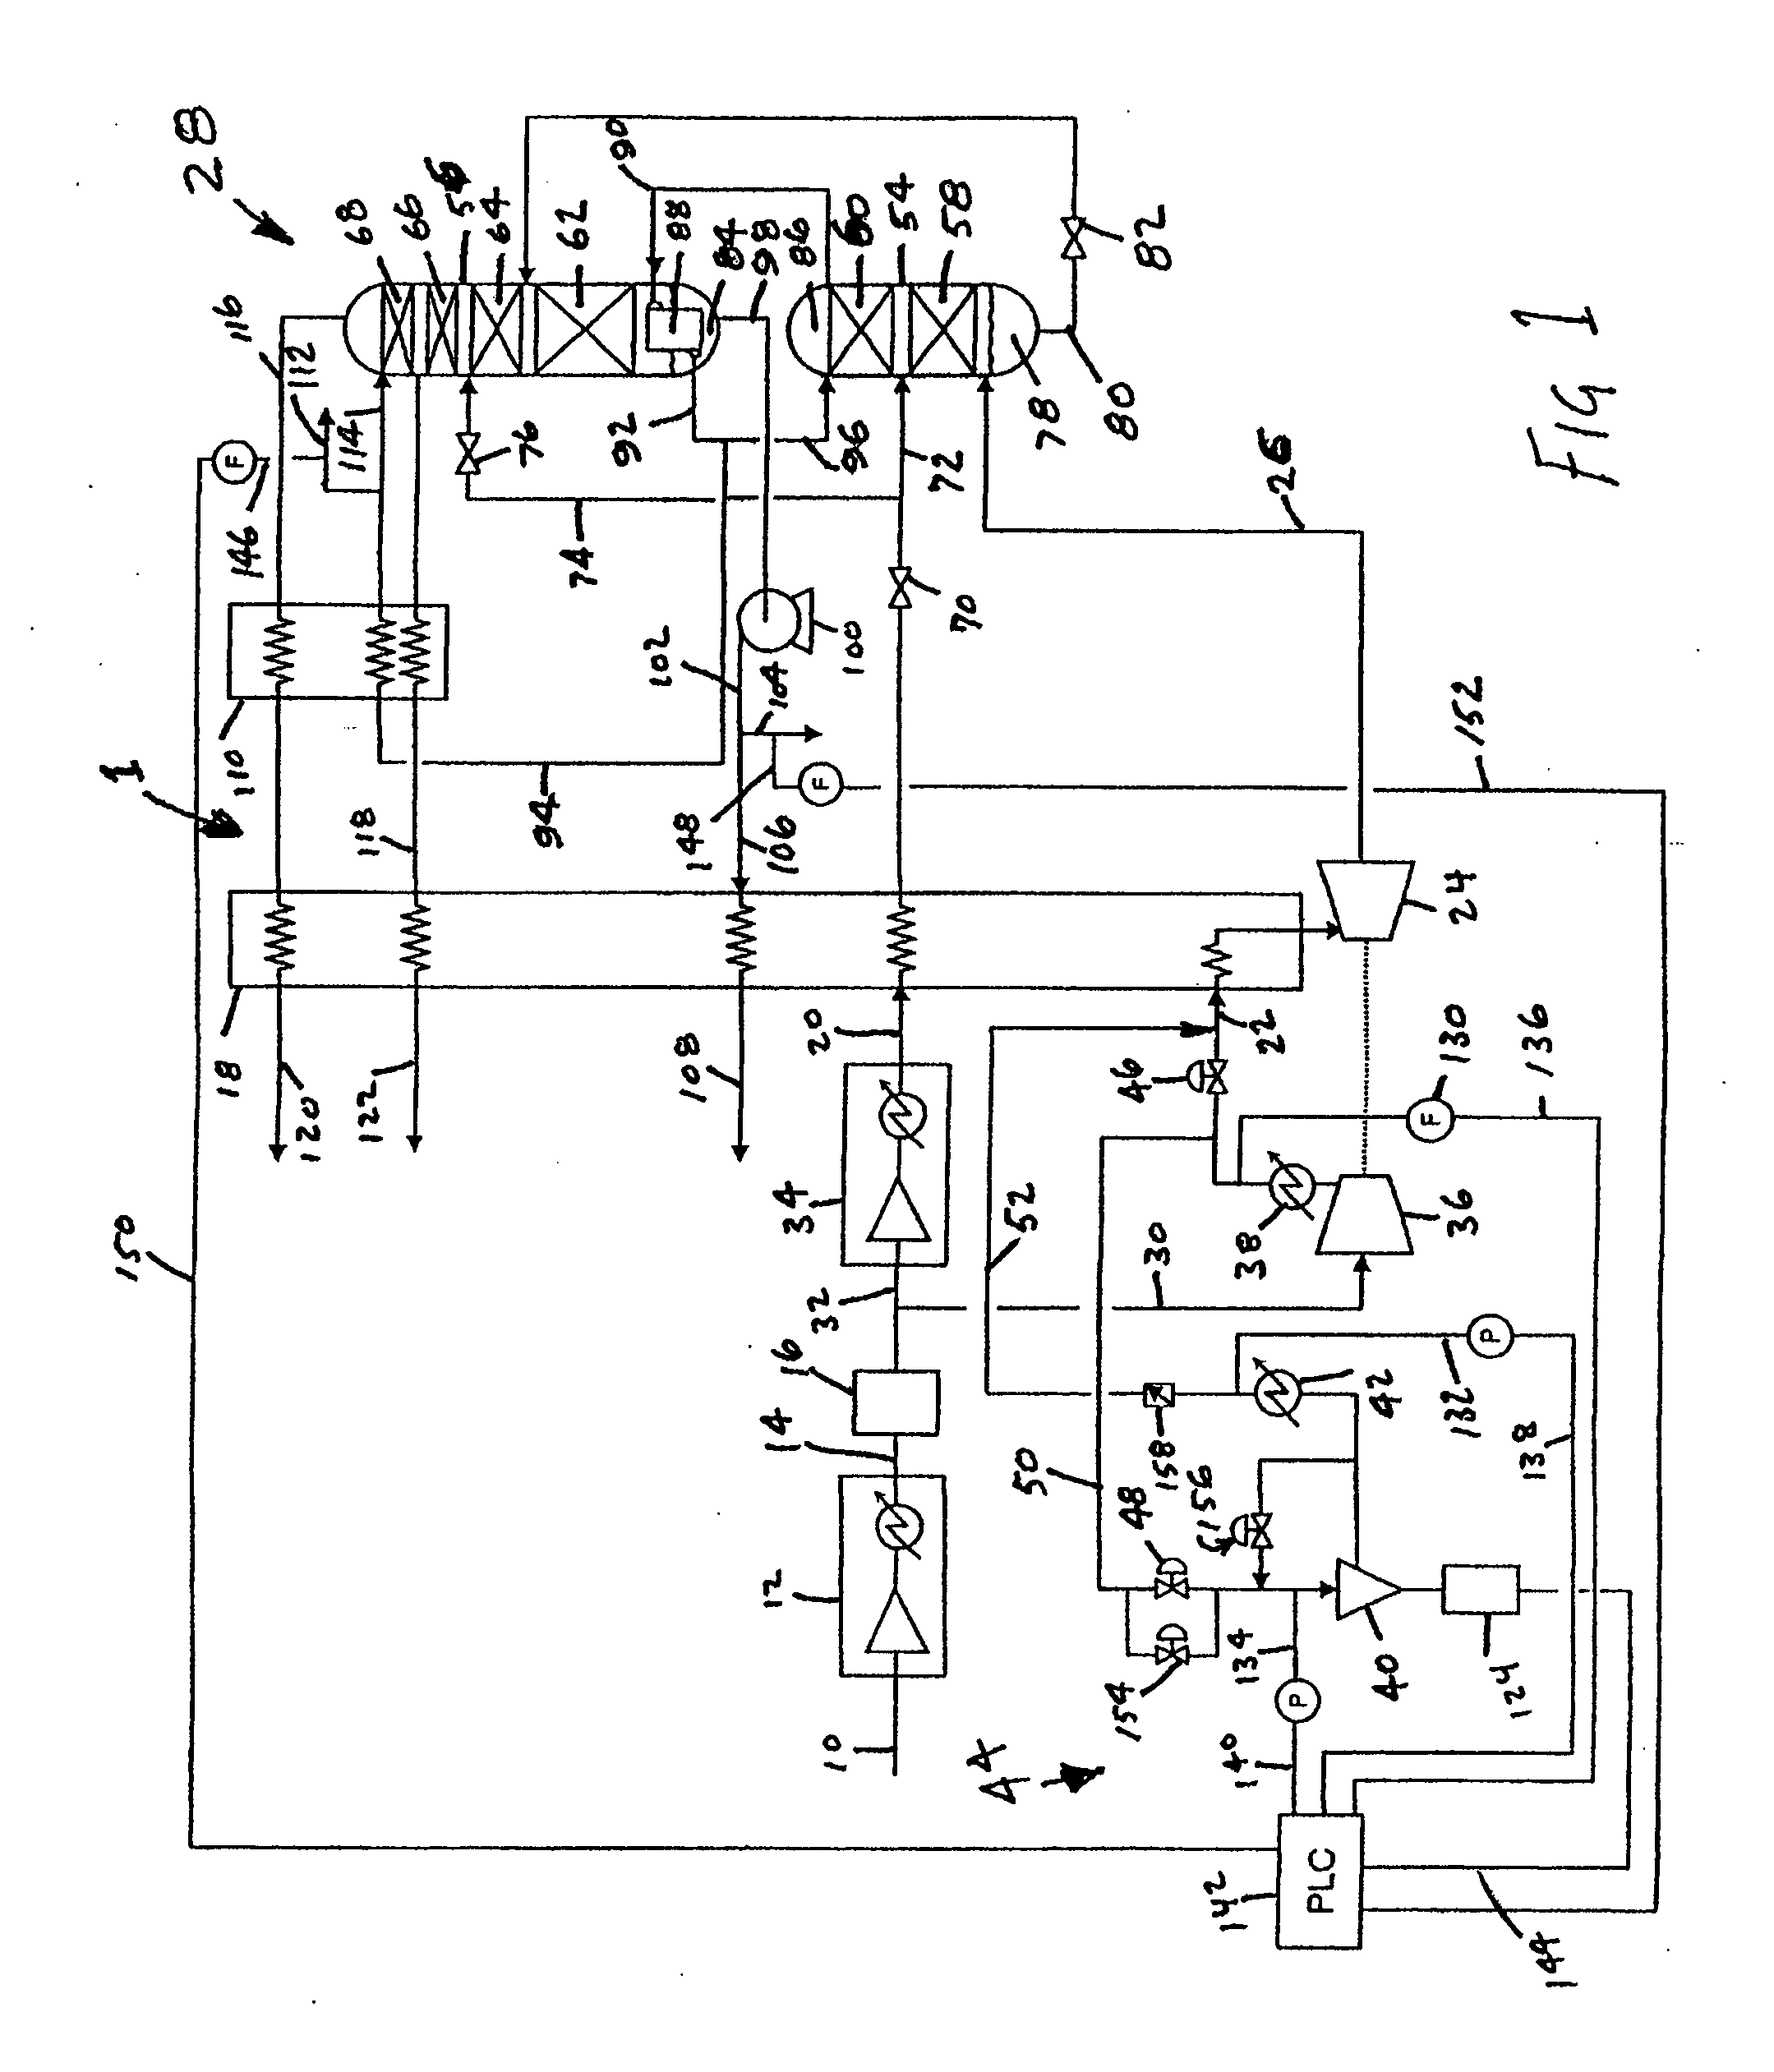 Distillation method and apparatus